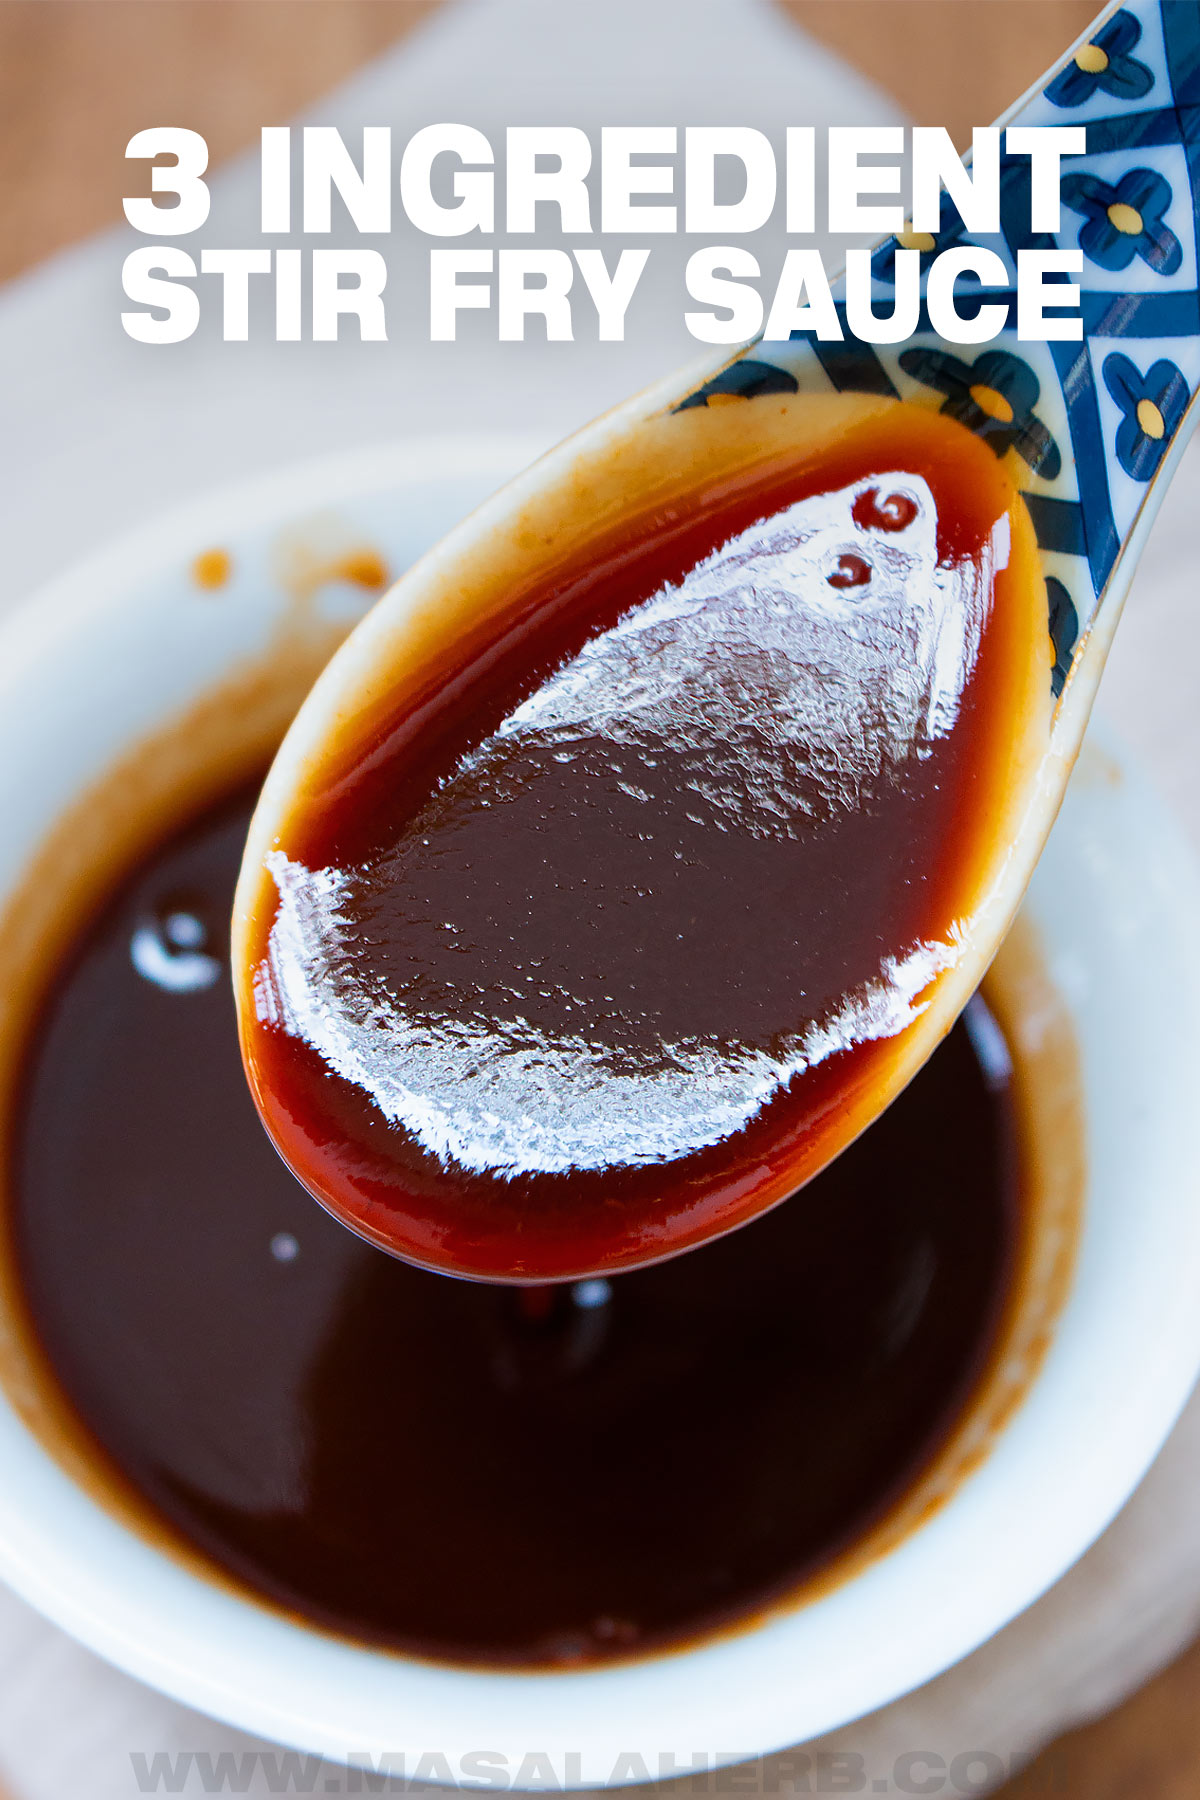 3 Ingredient Stir Fry Sauce Recipe cover